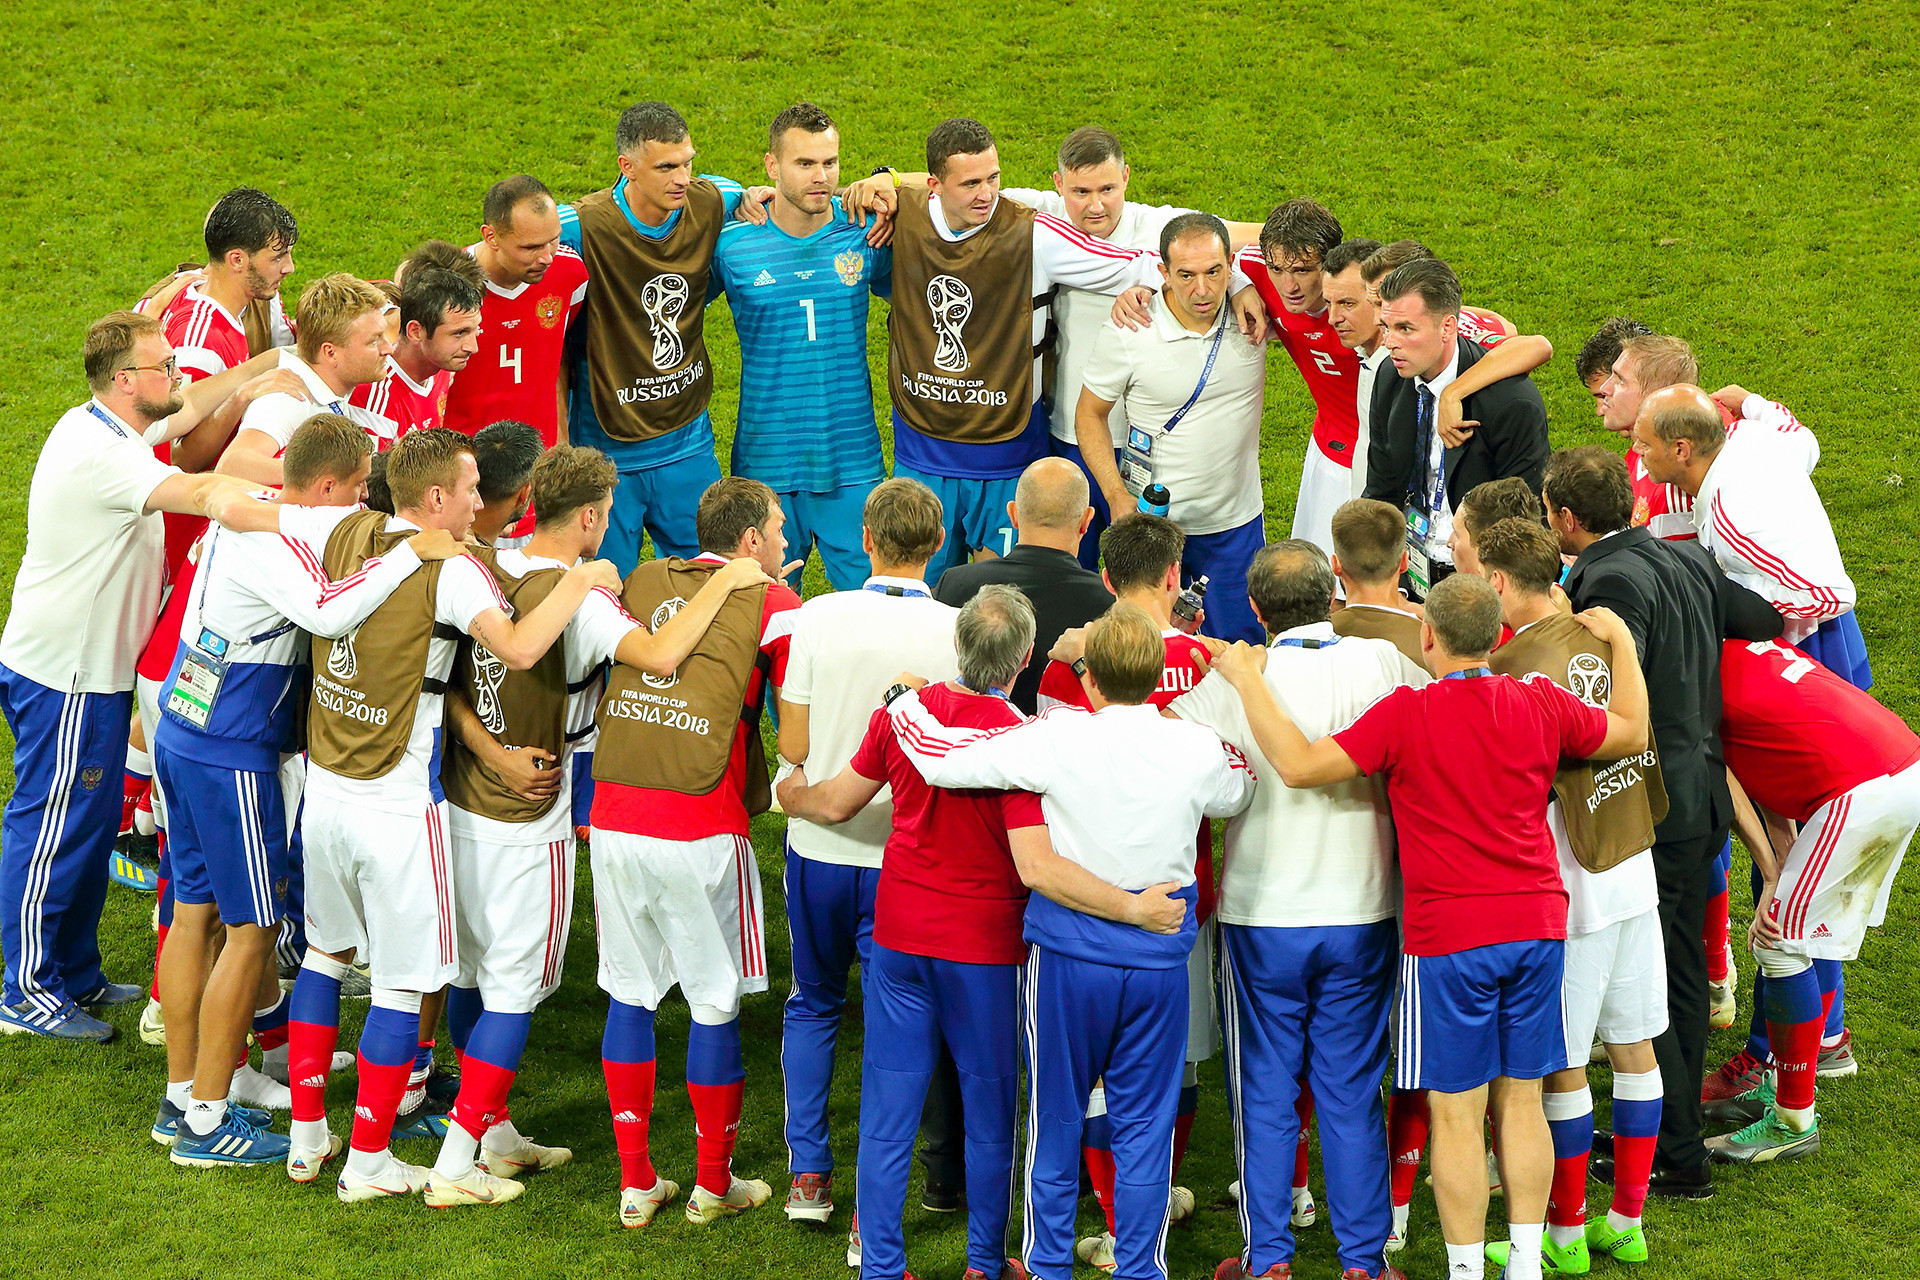 Tim Rusia sebelum seri penalti dengan Kroasia. Mereka kalah tetapi tetap menjadi pahlawan bagi semua penggemar sepak bola Rusia.